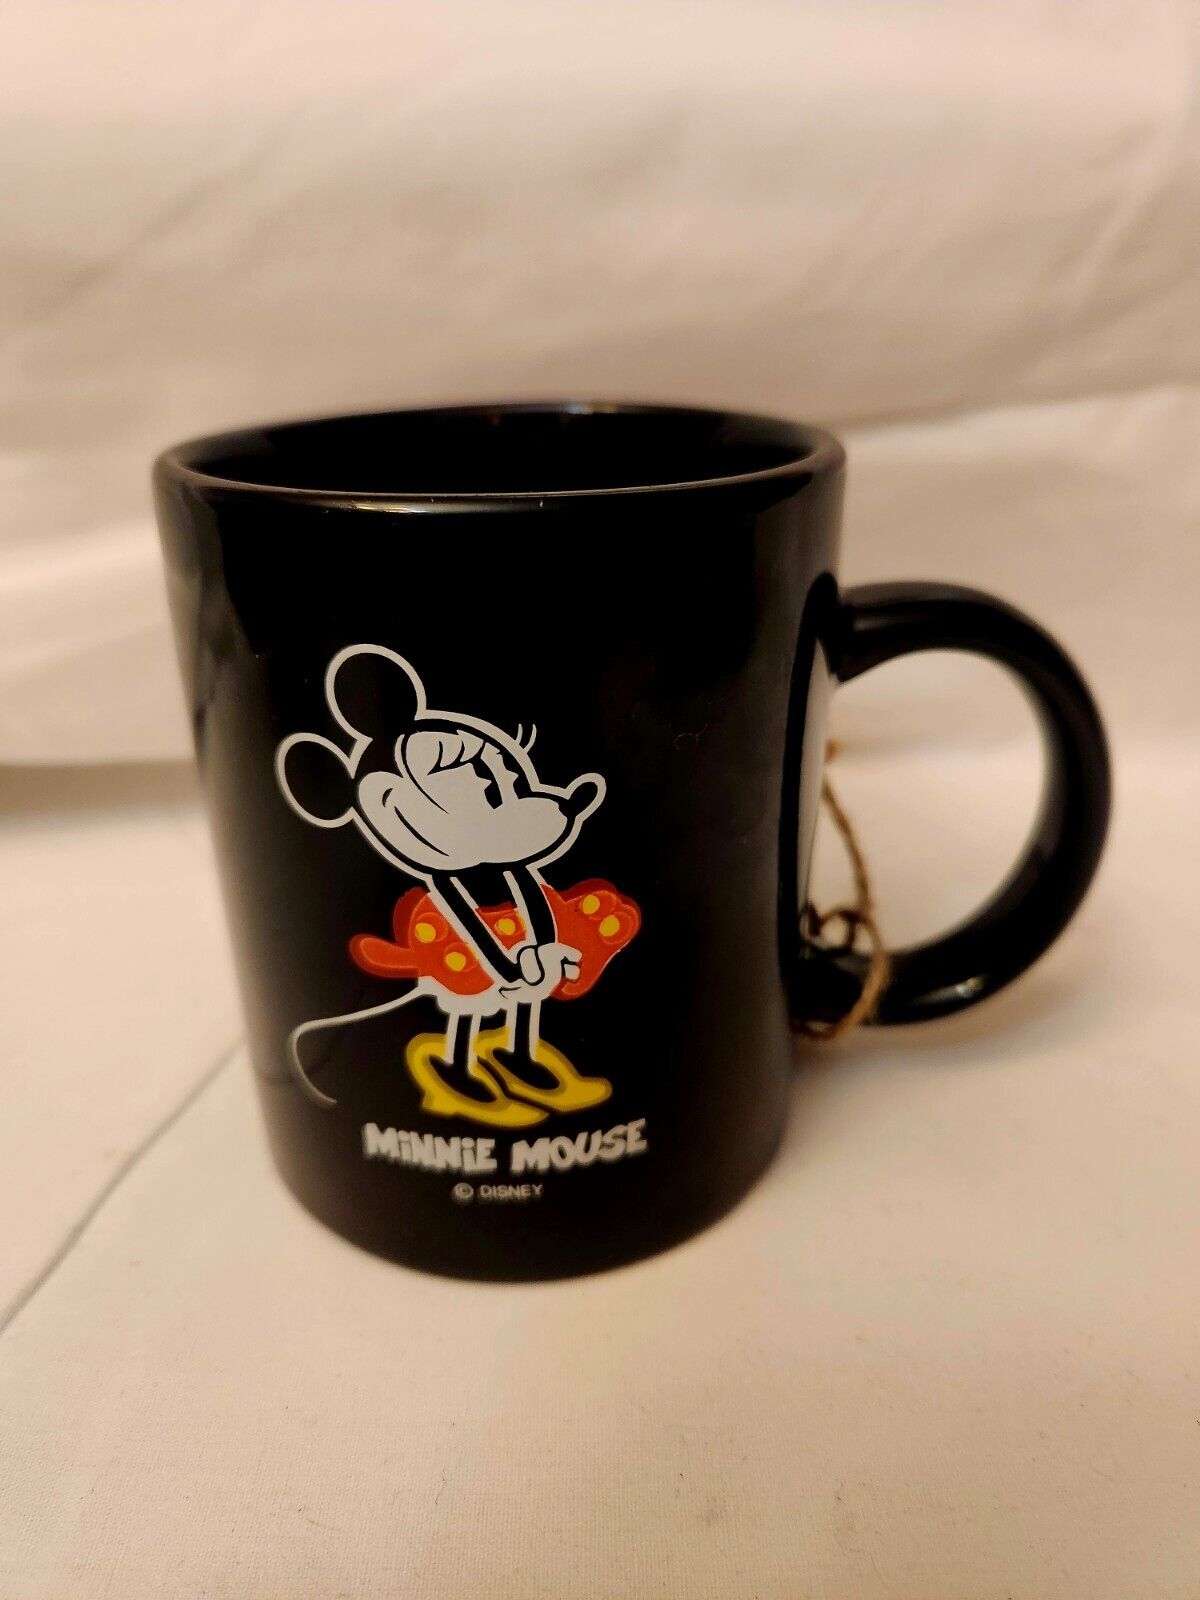 RARE Vintage Disney Minnie Mouse Coffee Mug Black Red Dress